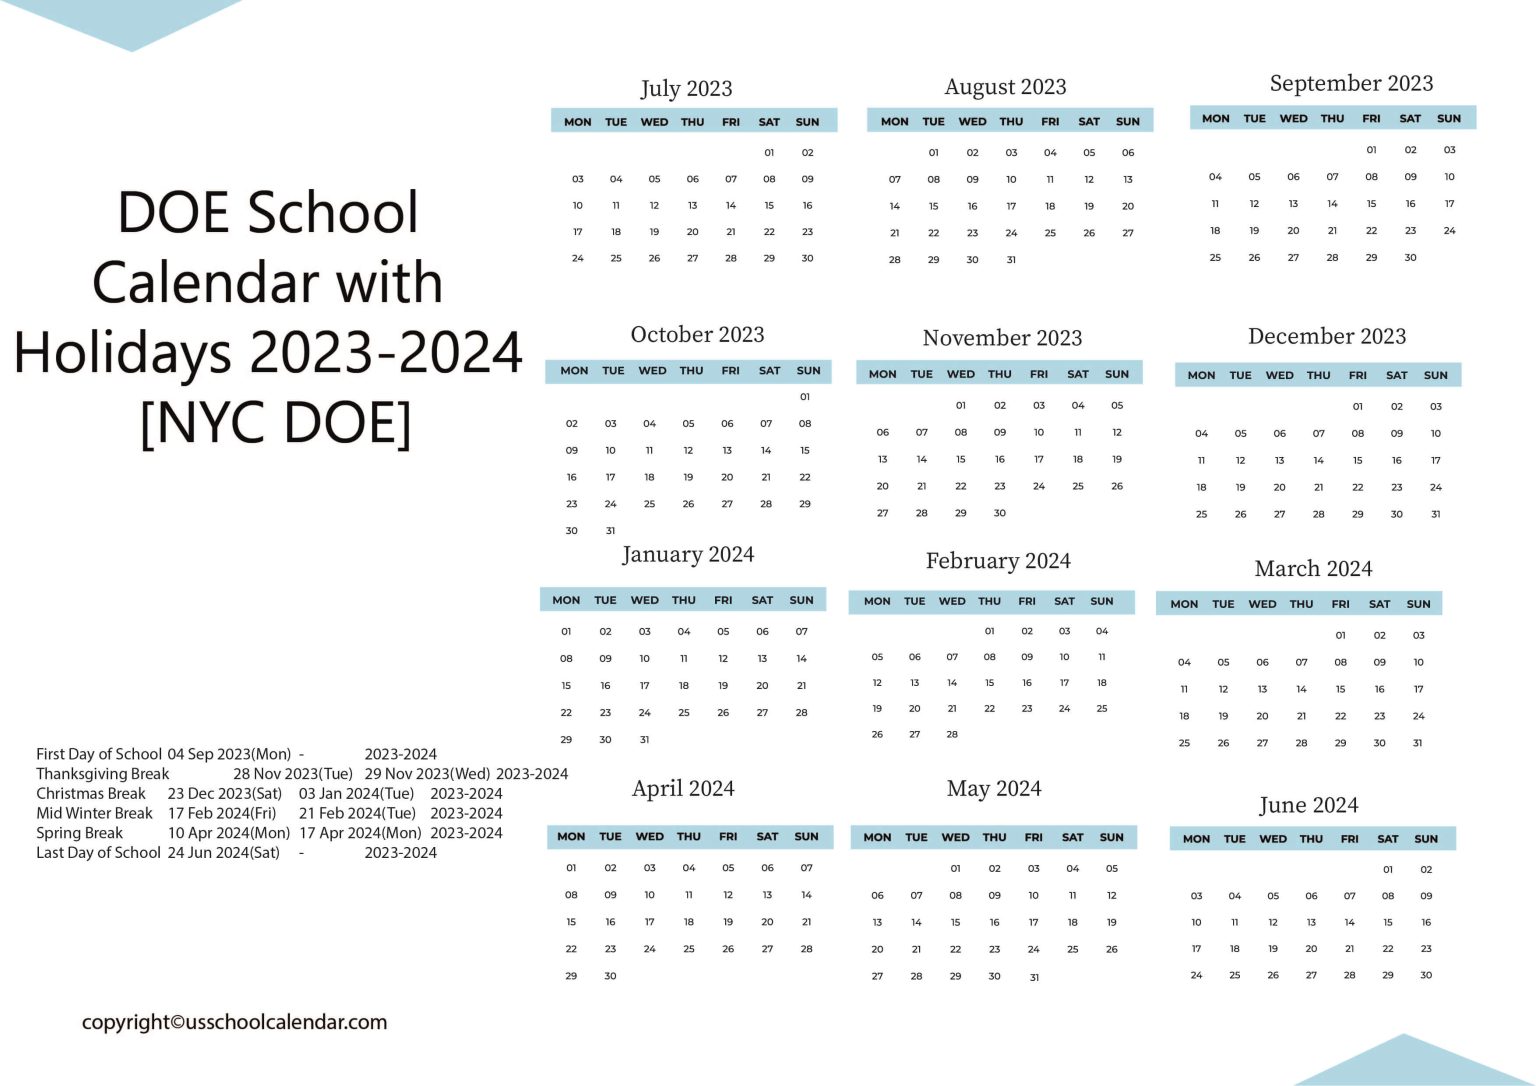 Uft Nyc Doe Calendar 2025 2026